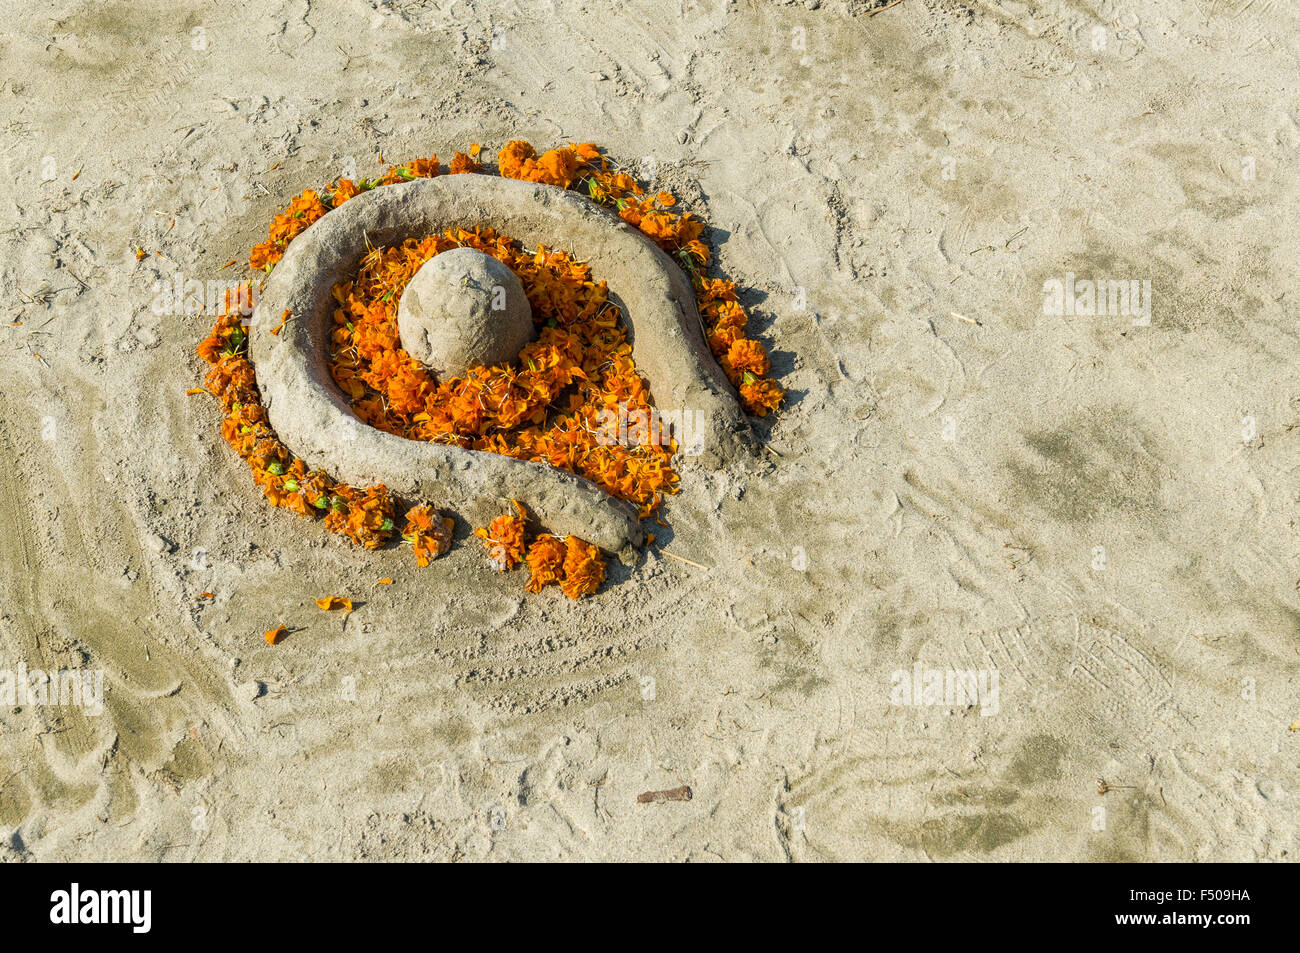 Shiva Lingam made of sand and flowers at the Sangam, the confluence of the rivers Ganges, Yamuna and Saraswati, at Kumbha Mela Stock Photo